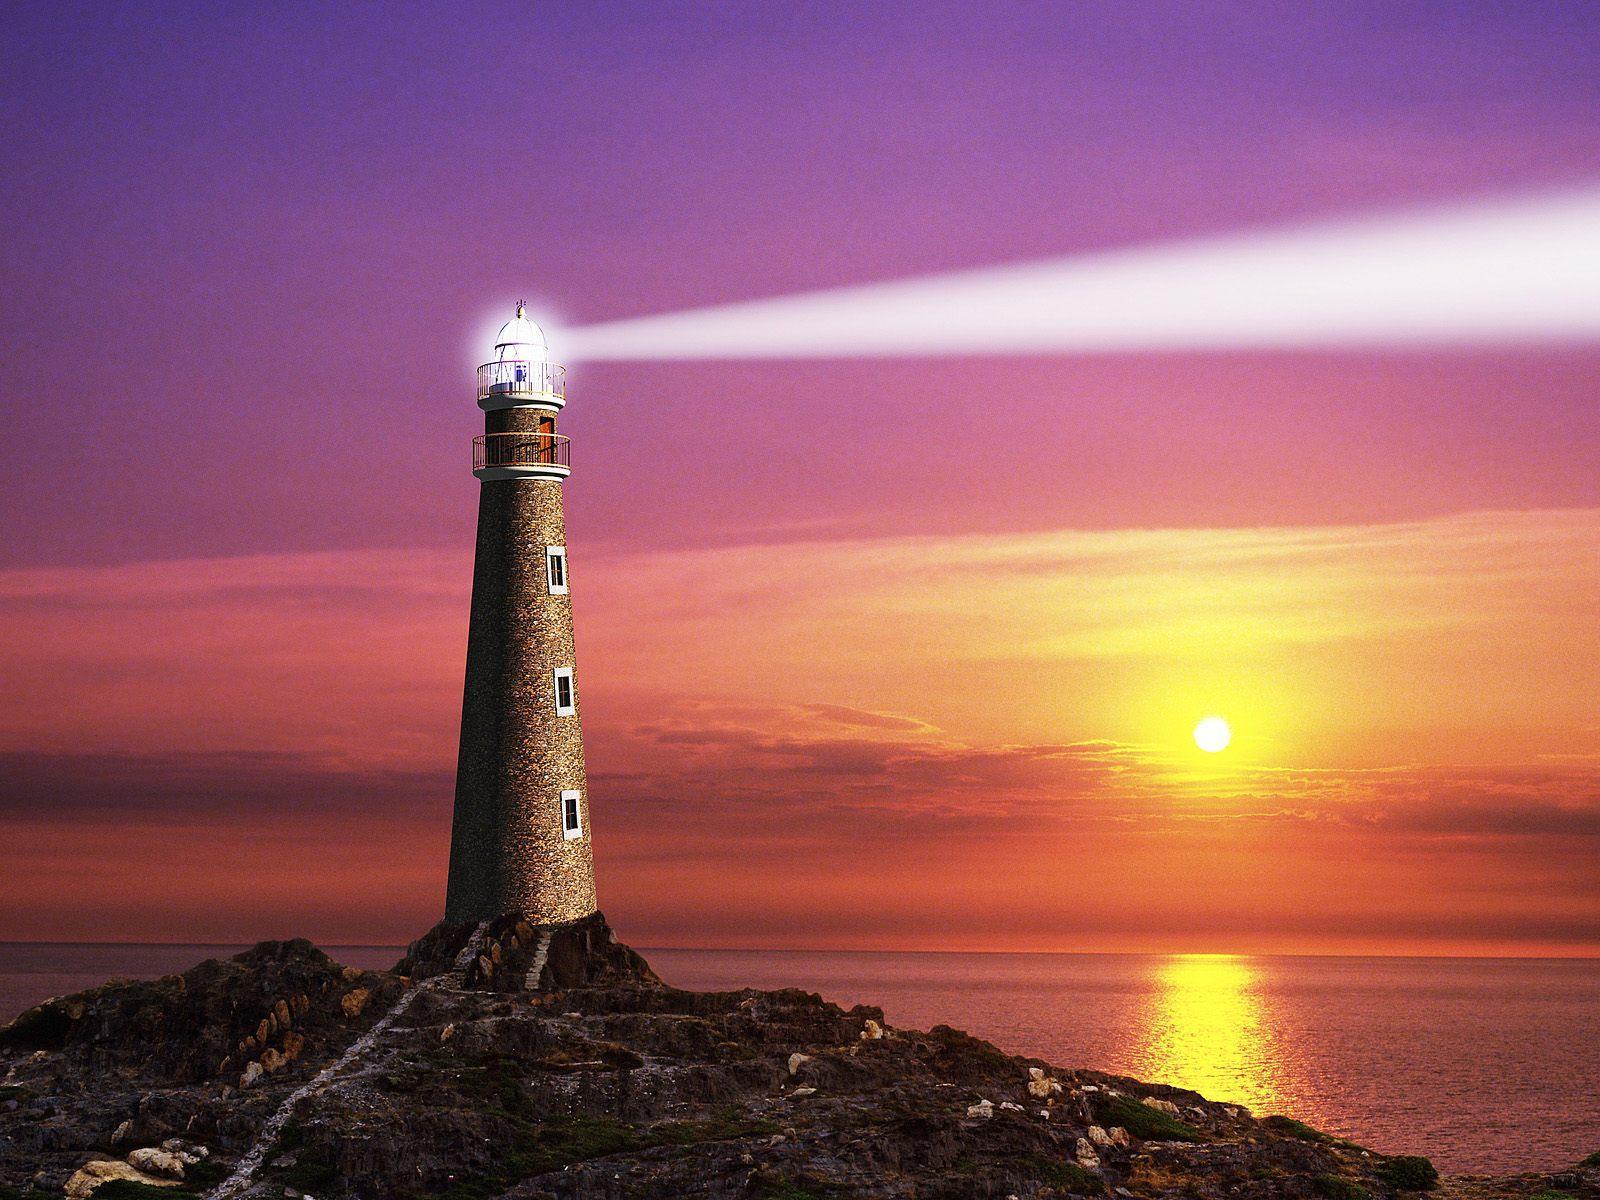 The coastal lighthouse free desktop background wallpaper image